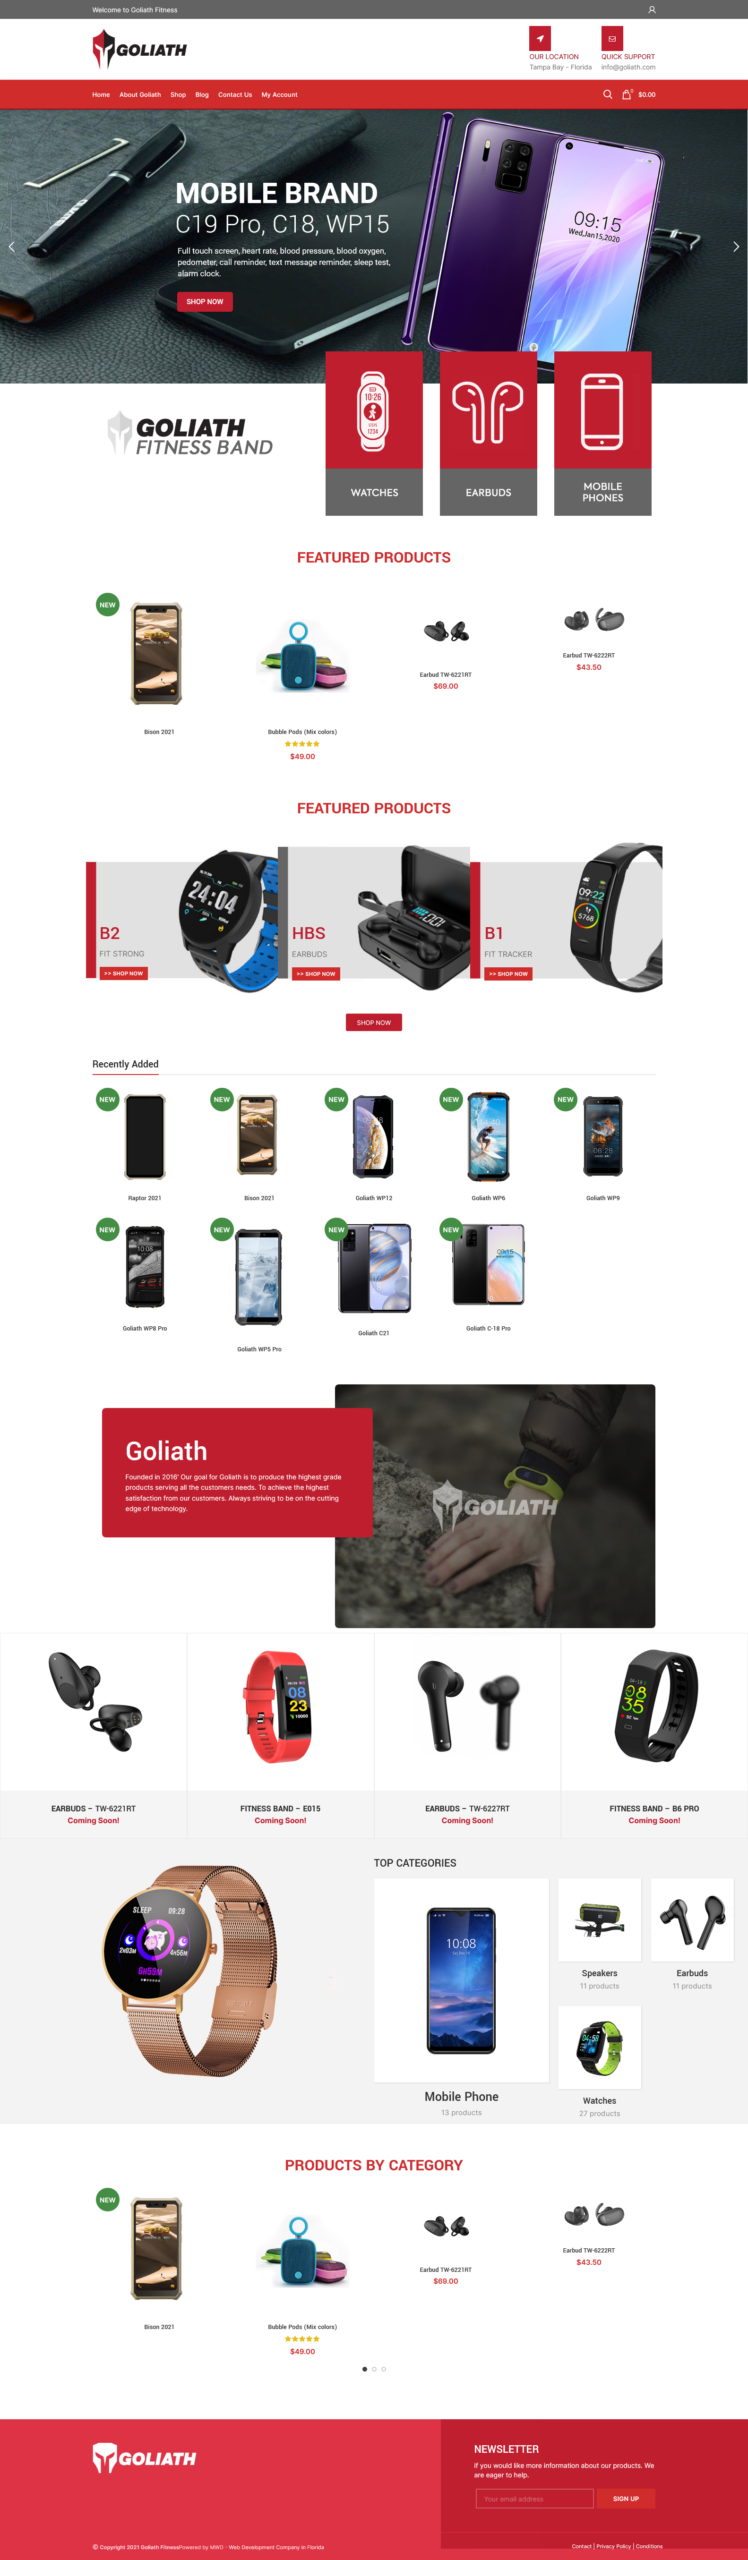 Goliath Mobile Website Design